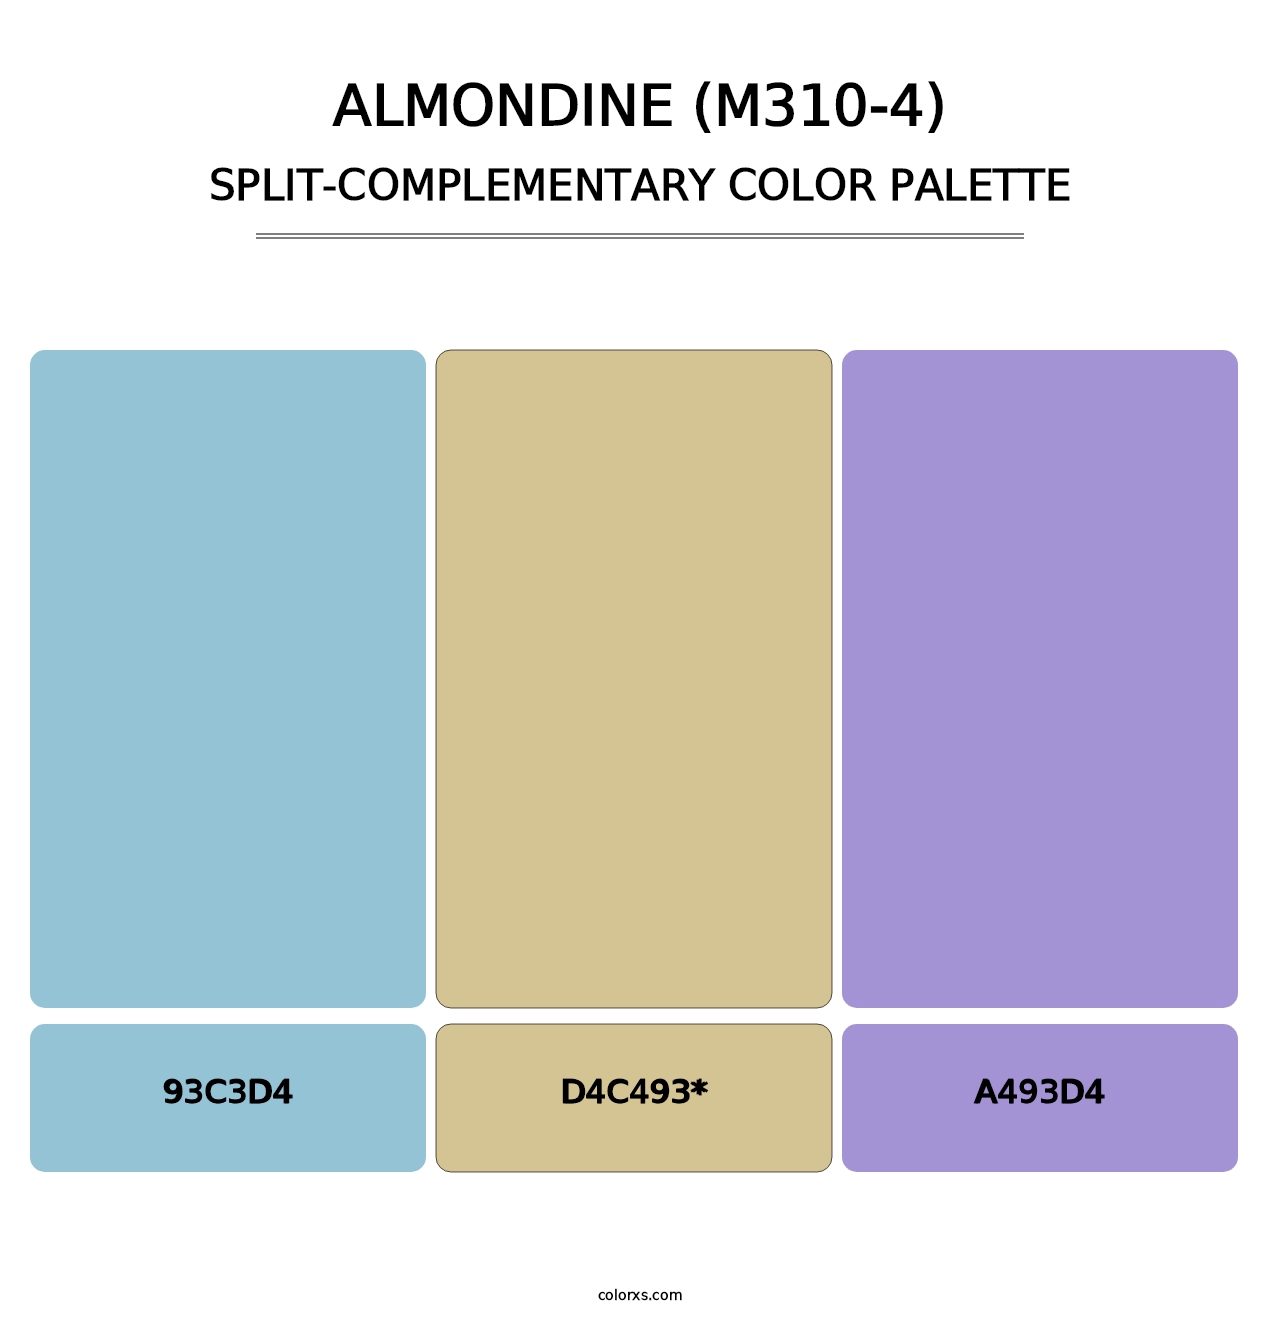 Almondine (M310-4) - Split-Complementary Color Palette